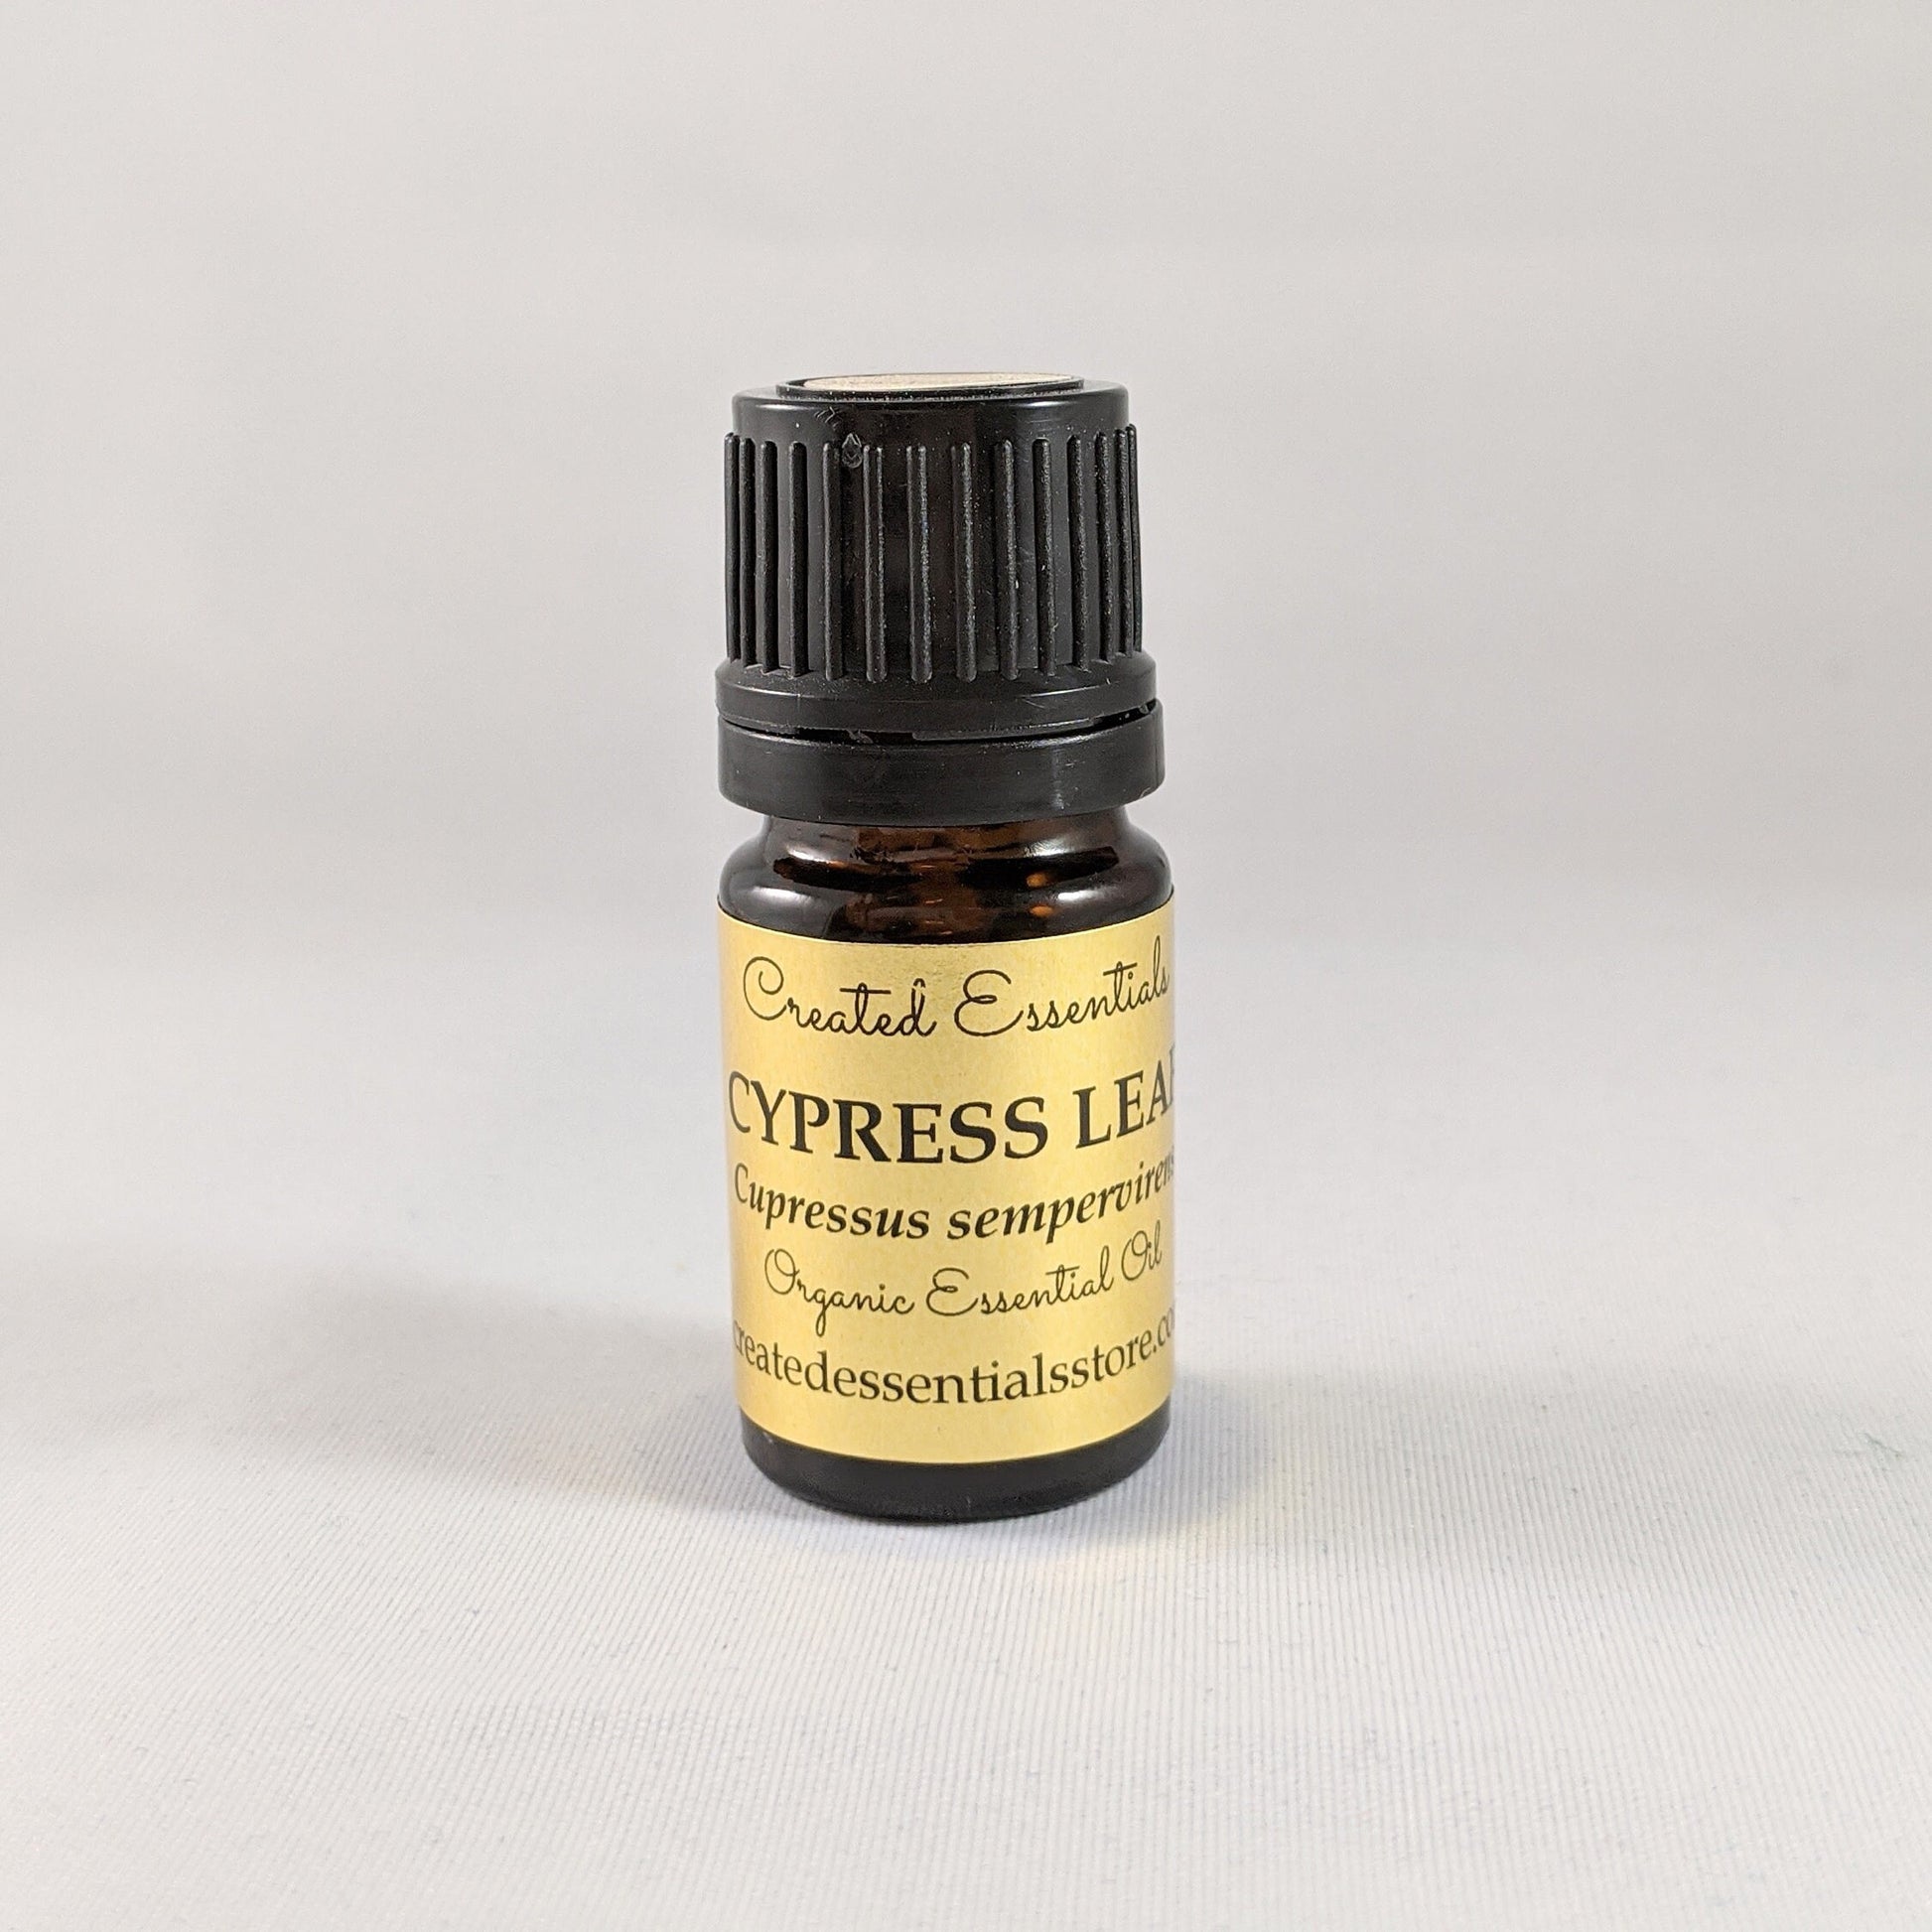 Cypress Essential Oil | Organic Essential Oil of Cypress Leaf | 100% Pure Essential Oil | Therapeutic Essential Oil of Cypress Leaf